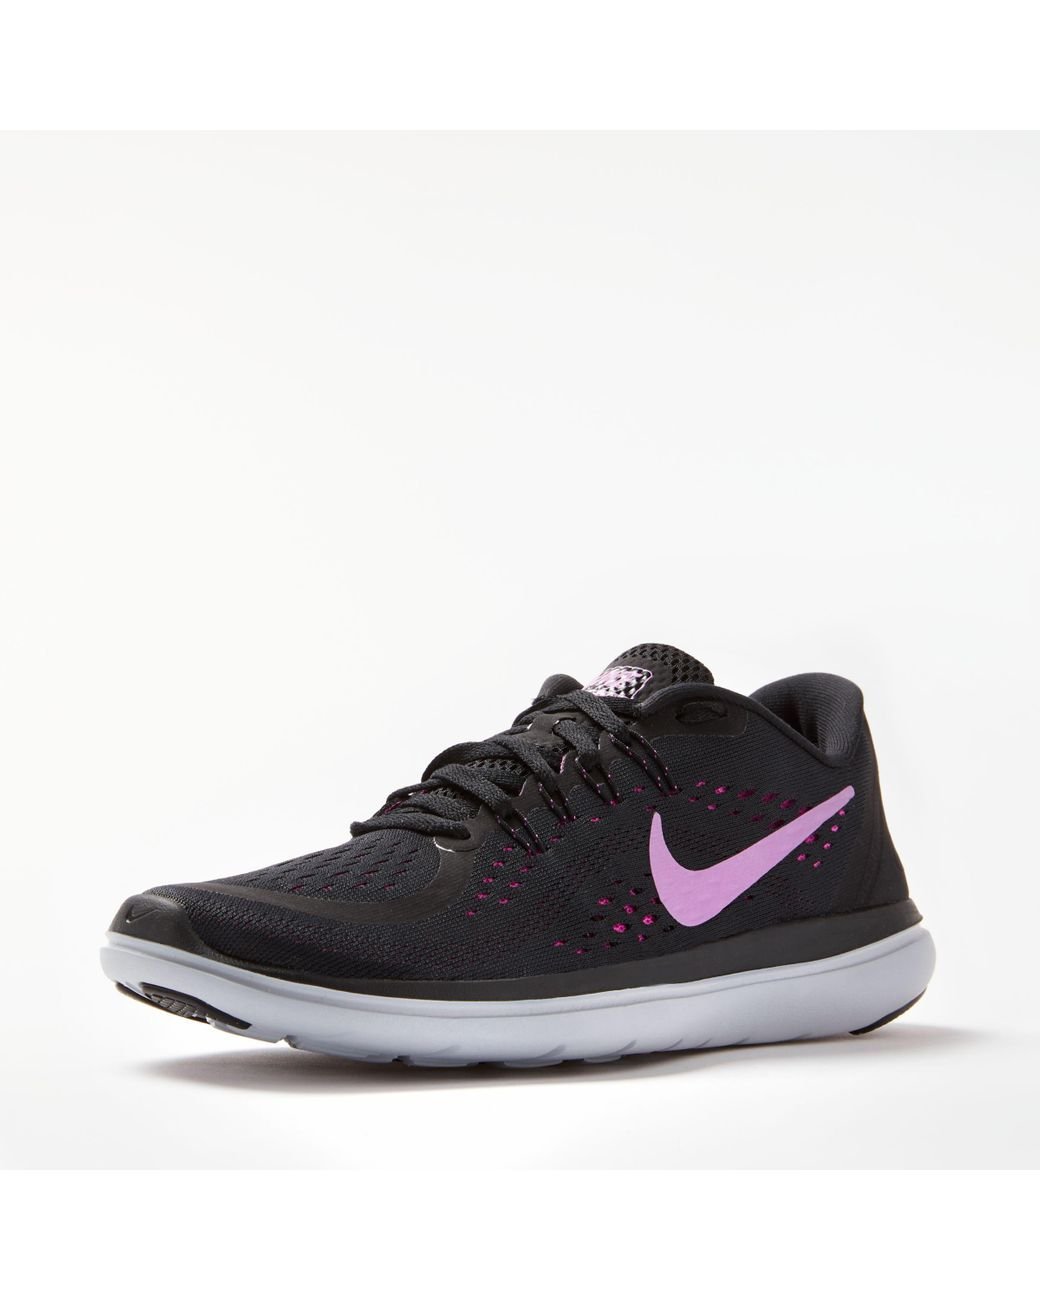 Nike Synthetic Flex 2017 Rn Women's Running Shoes in Black/Pink (Black) |  Lyst UK